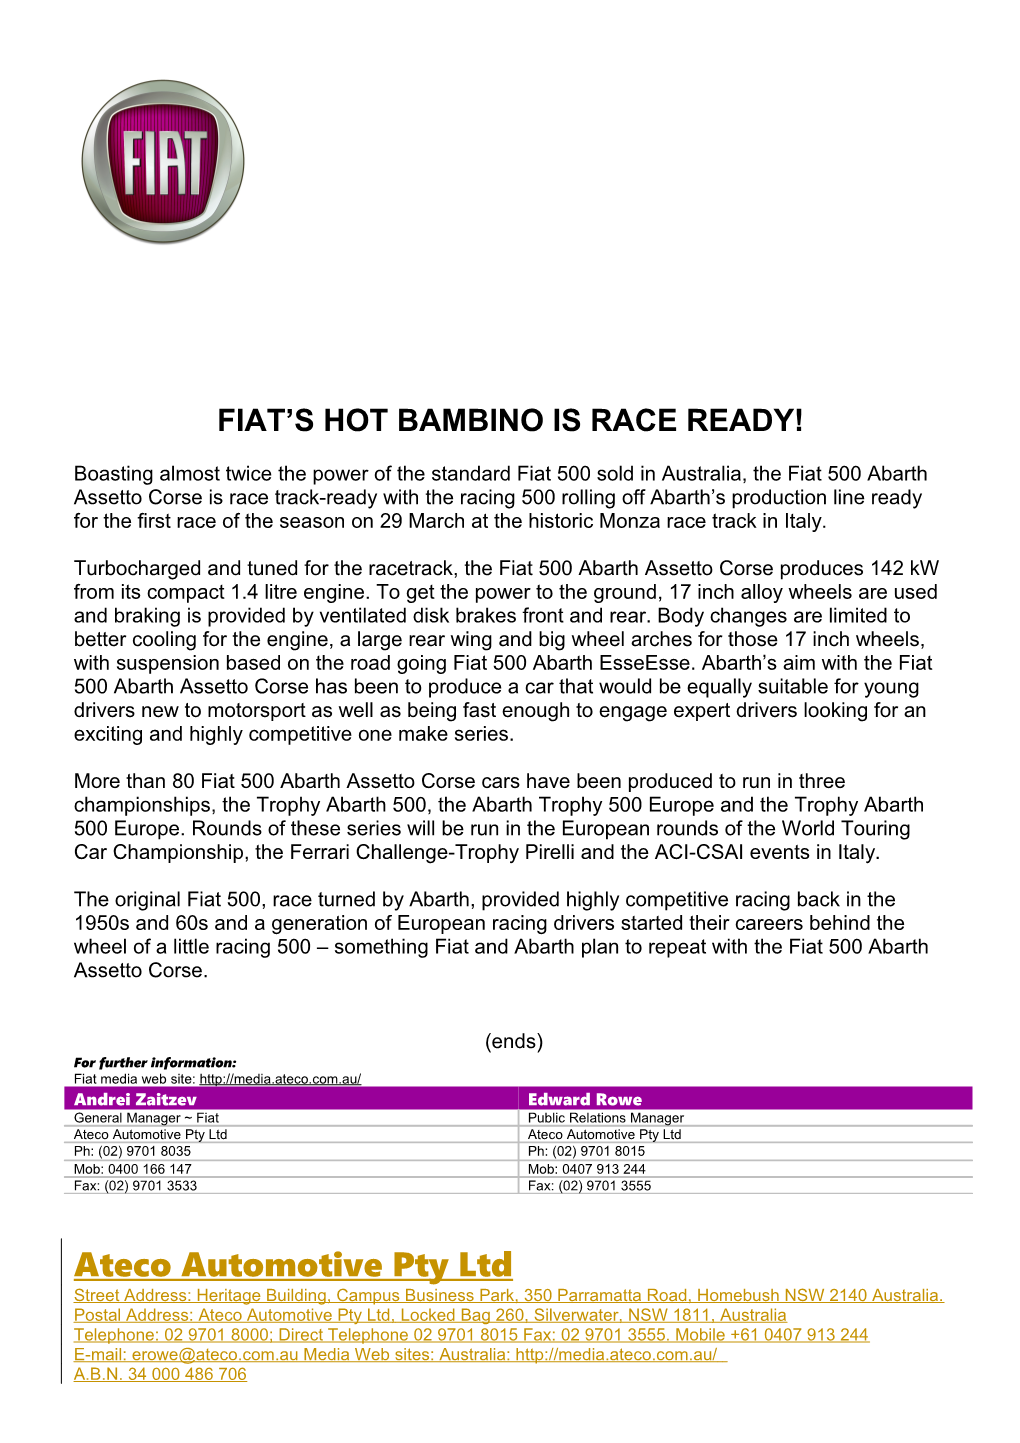 Fiat S Hot Bambino Is Race Ready!